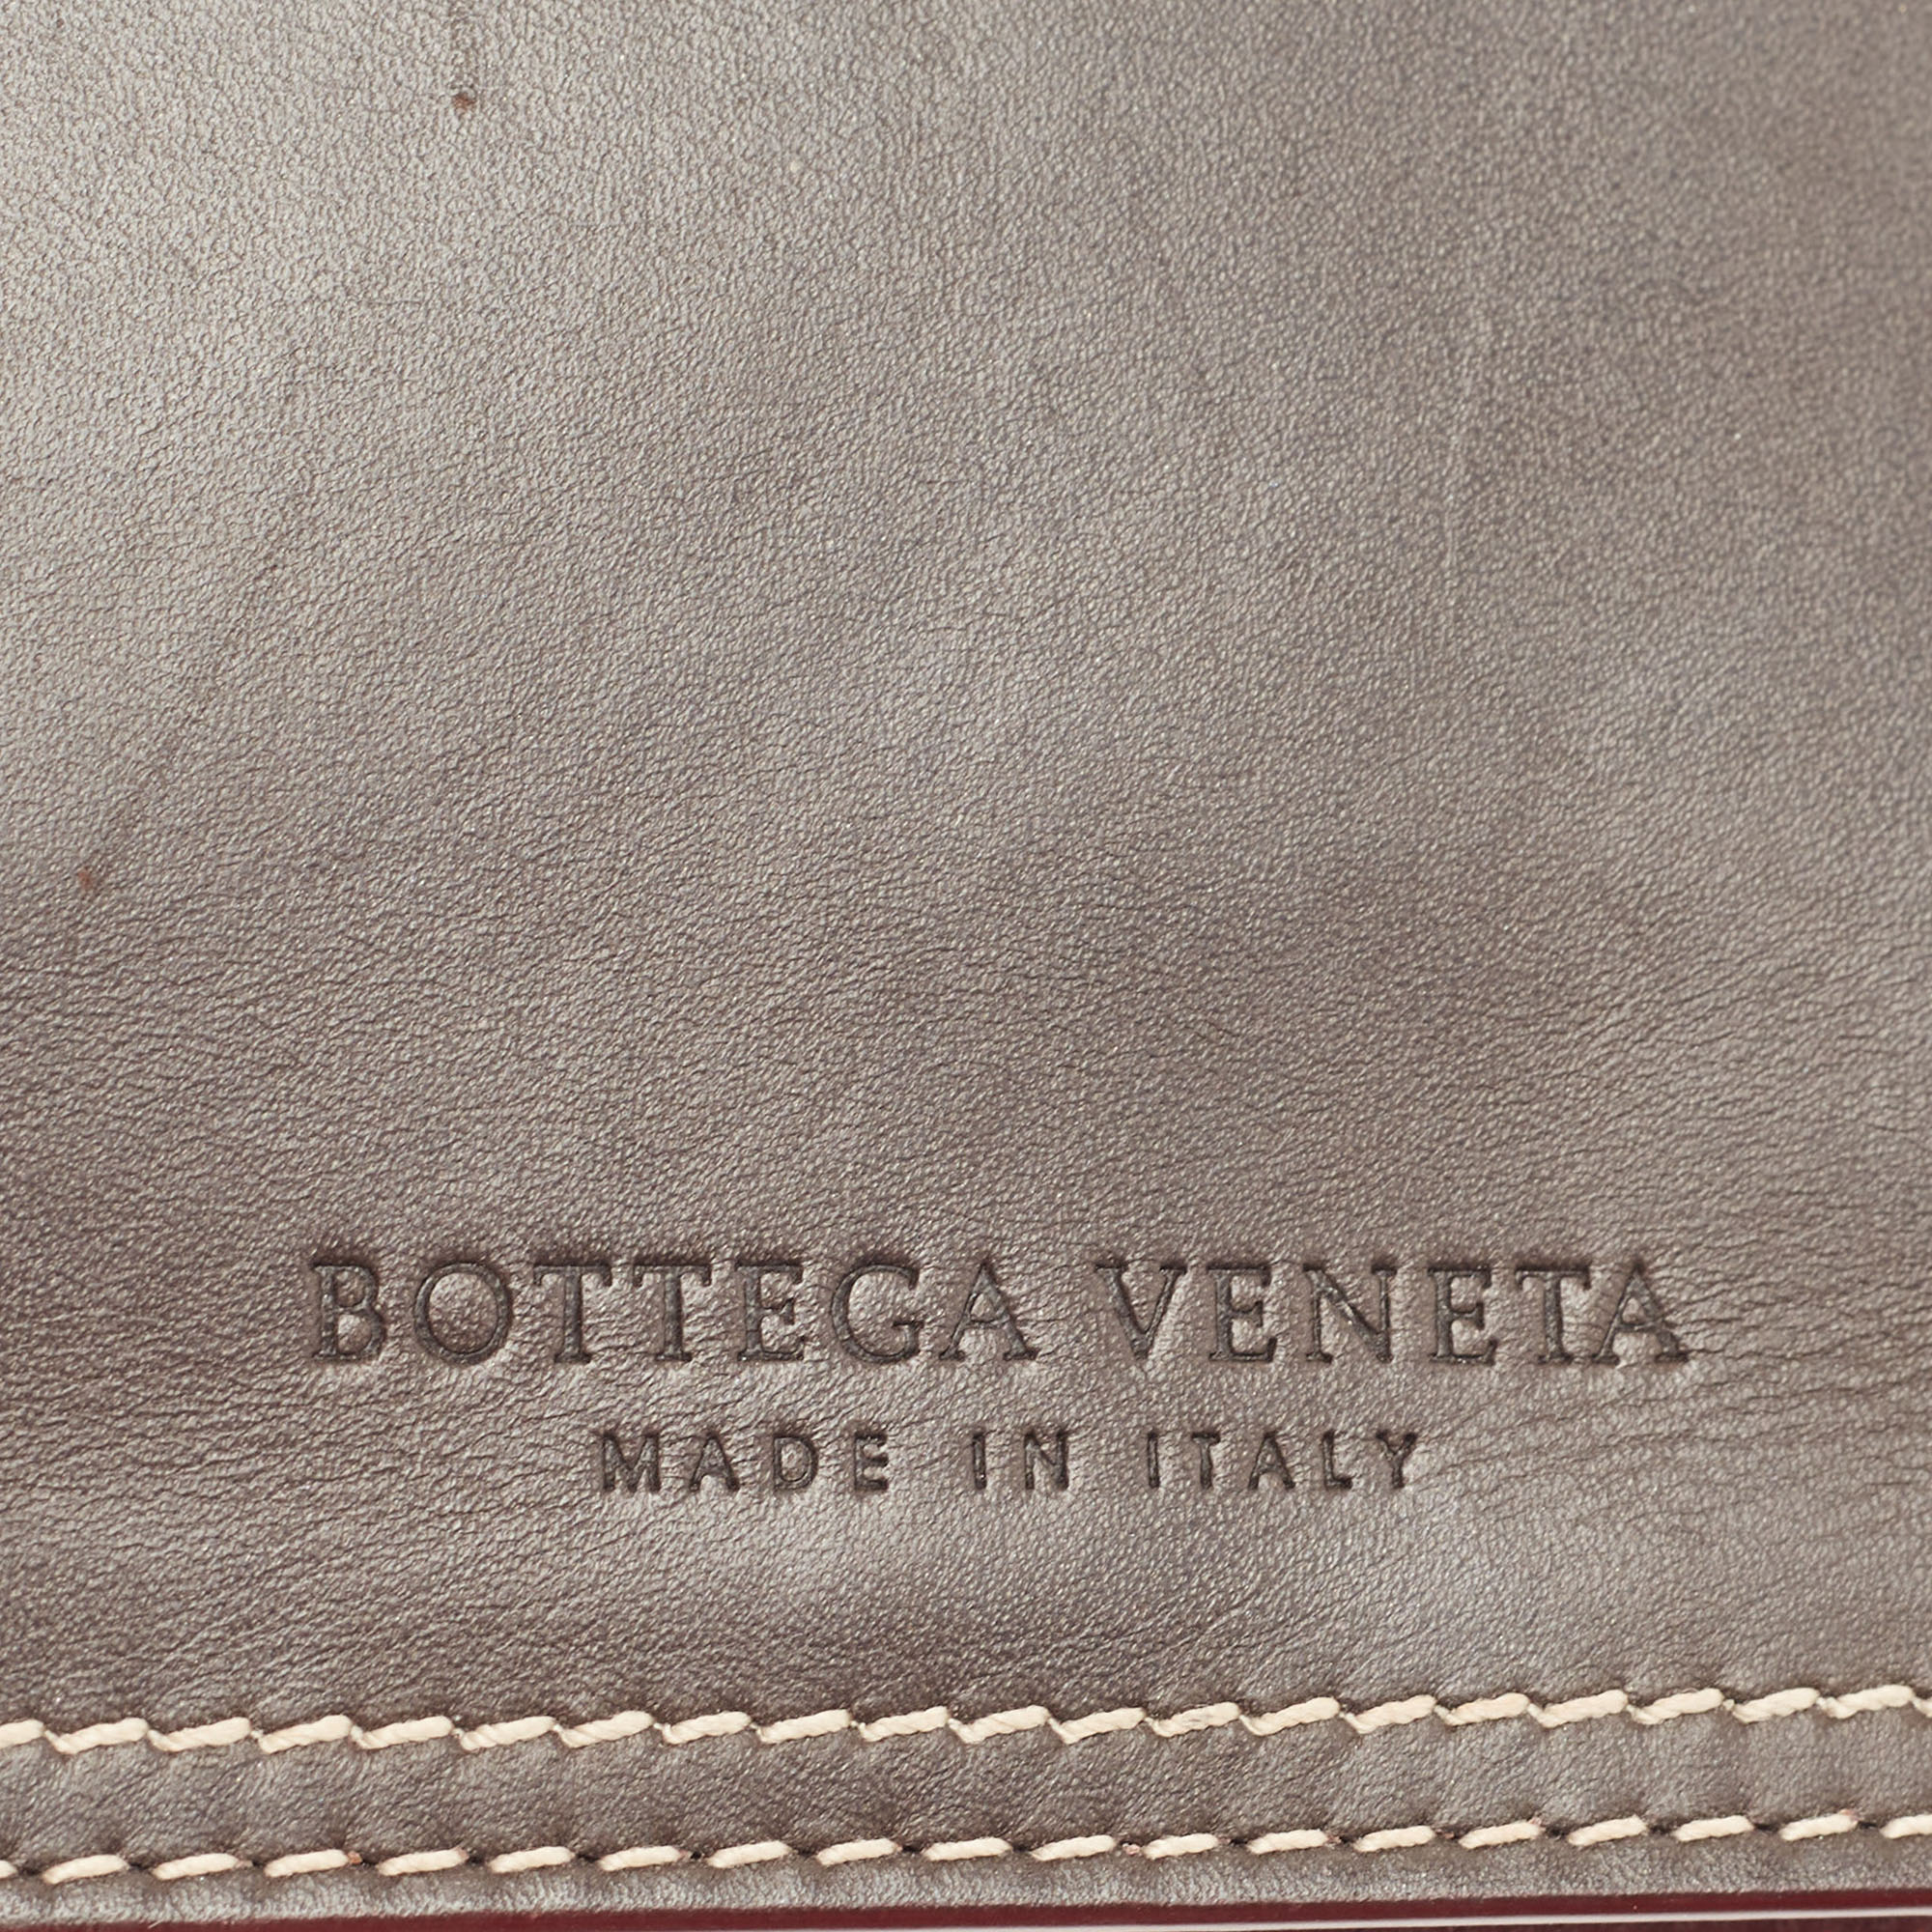 Bottega Veneta Grey/Brown Leather Snap Bifold Wallet